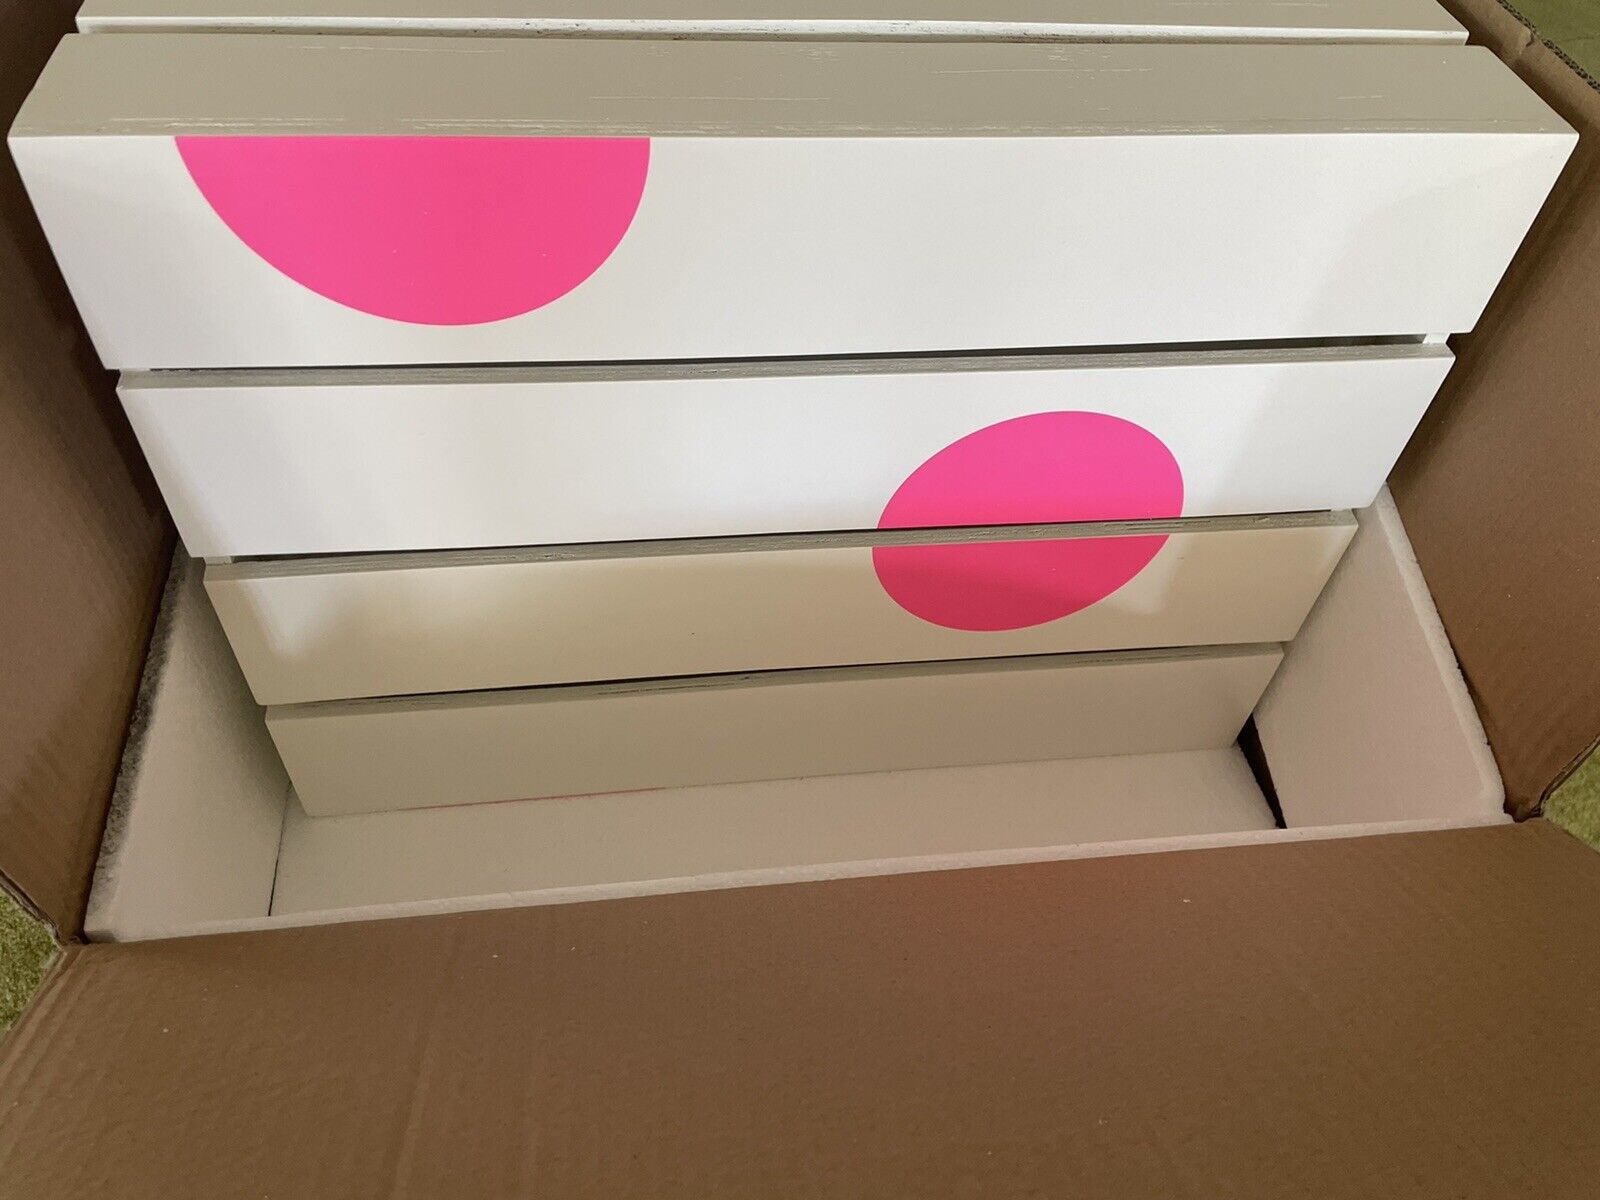 PINK Victoria’s Secret Wooden Store Display Crate NEW In Original Box RARE